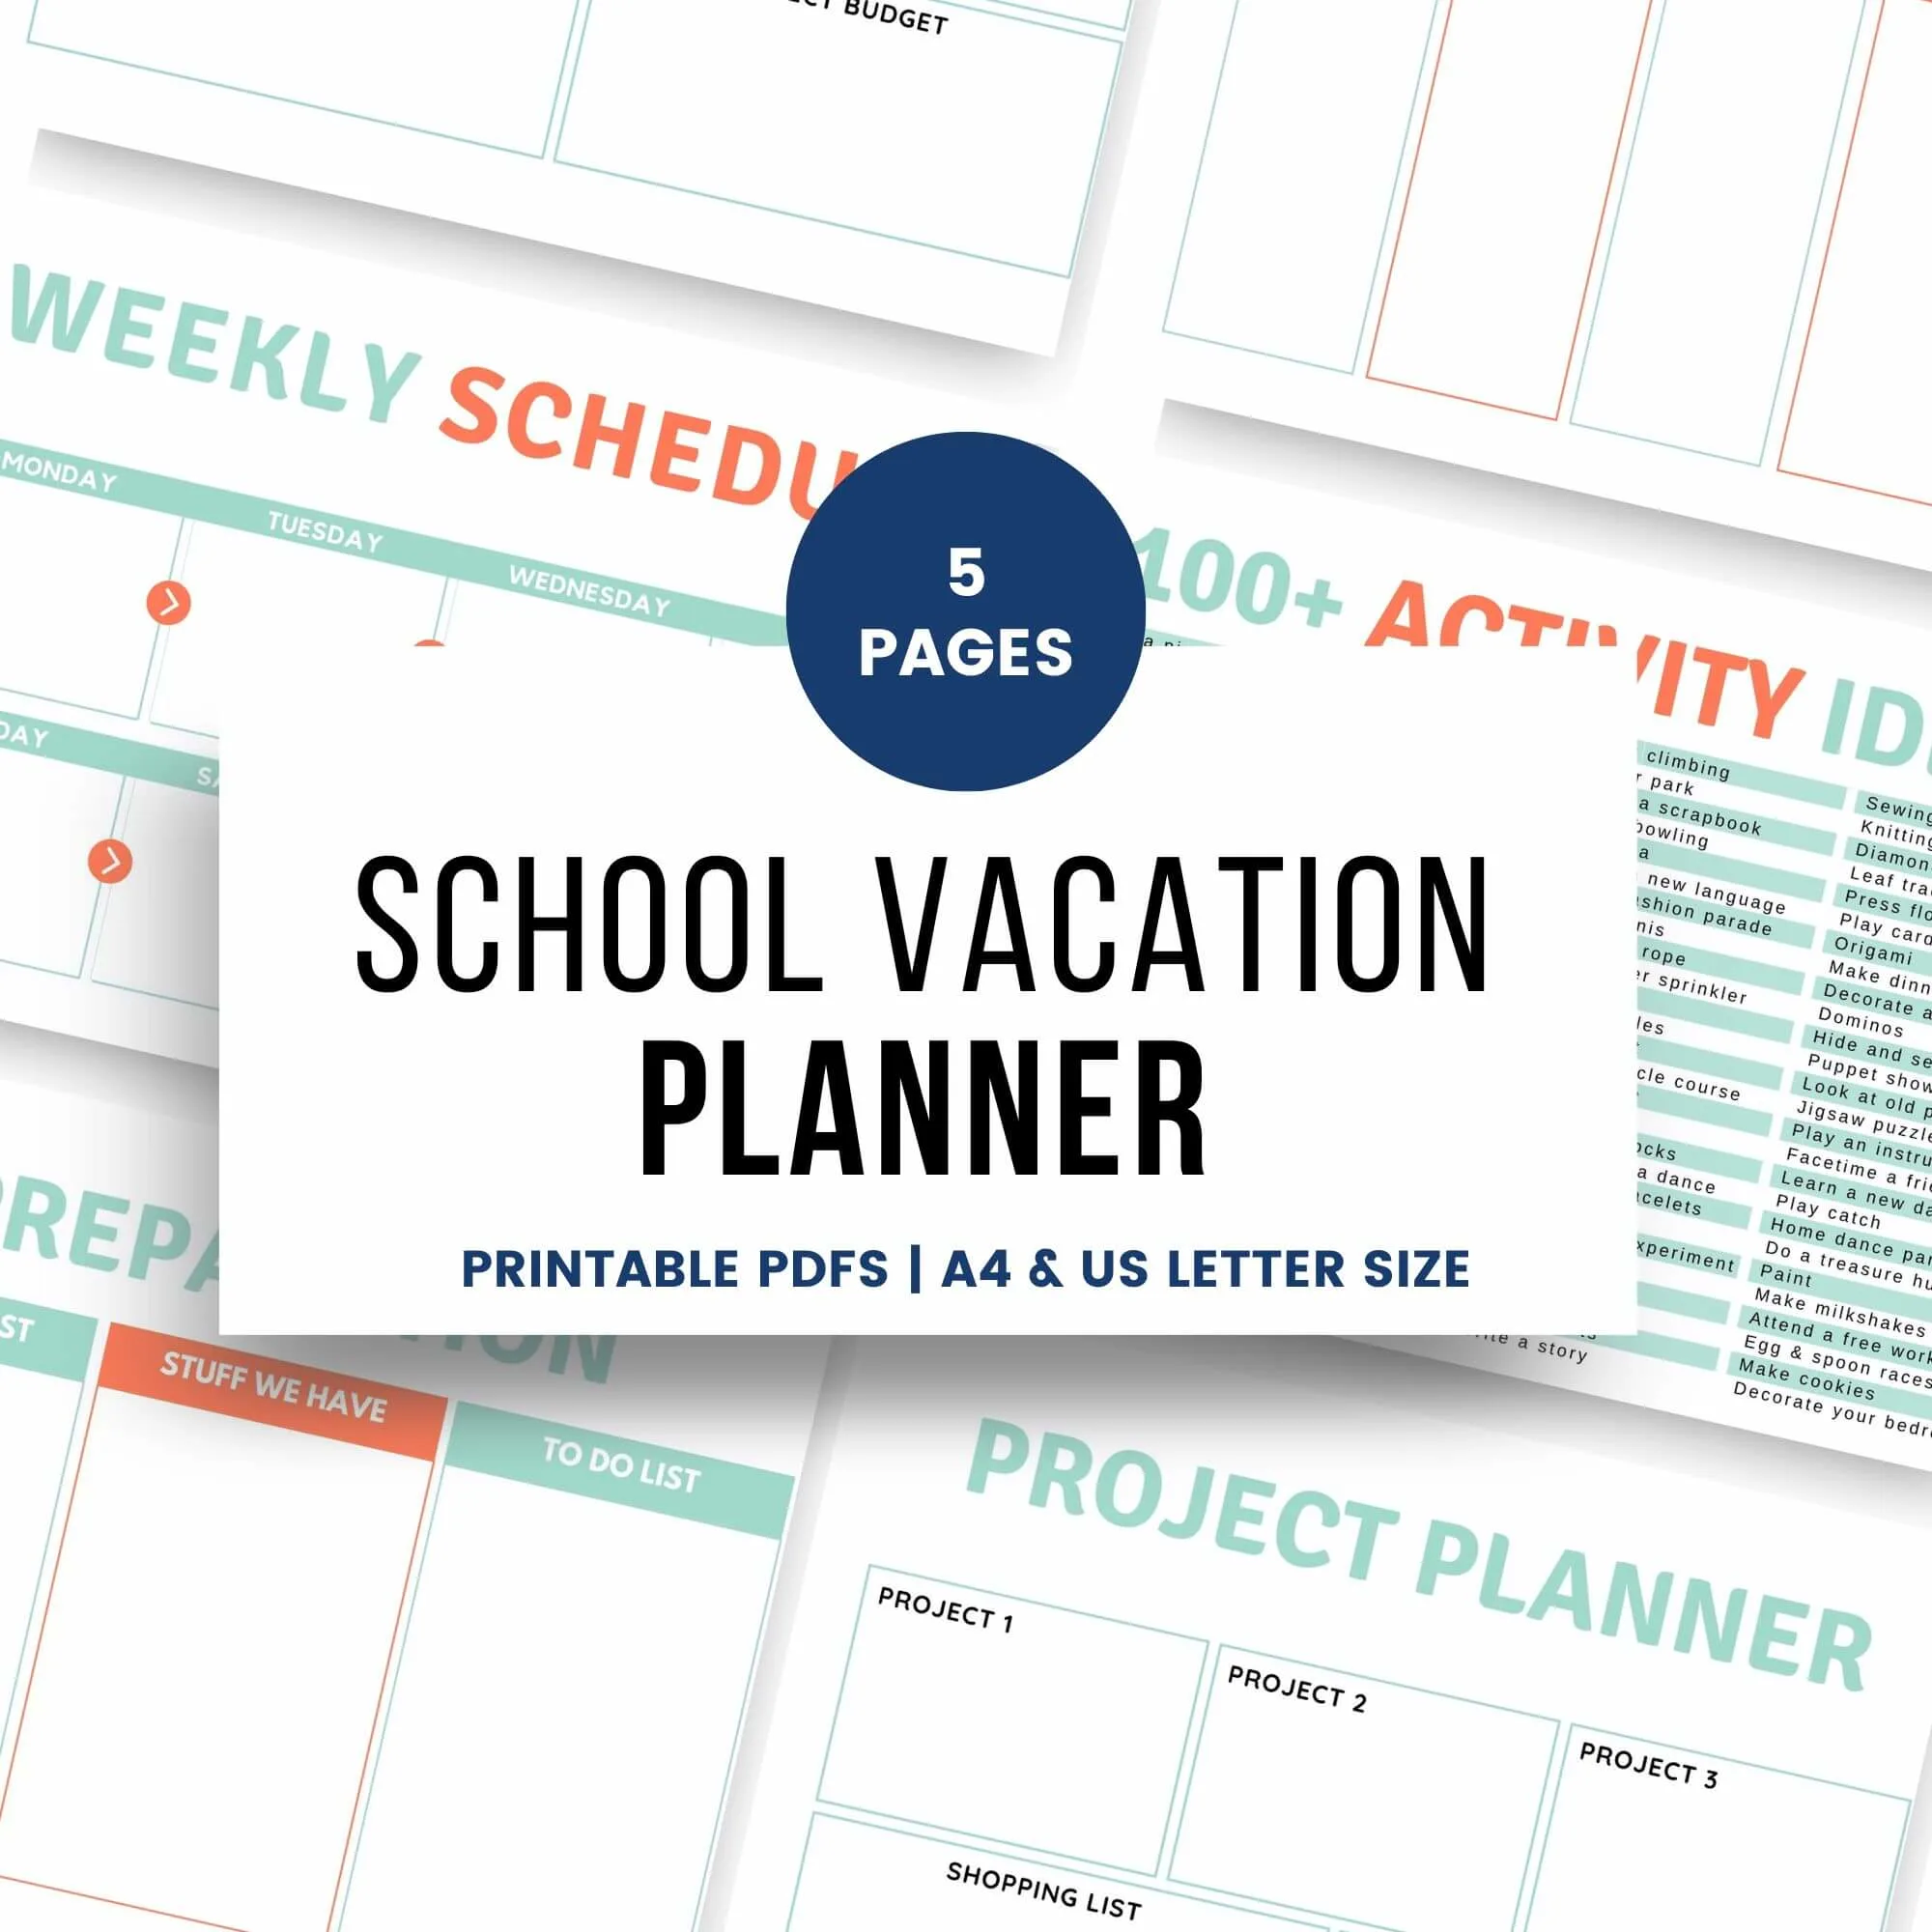 School vacation planner